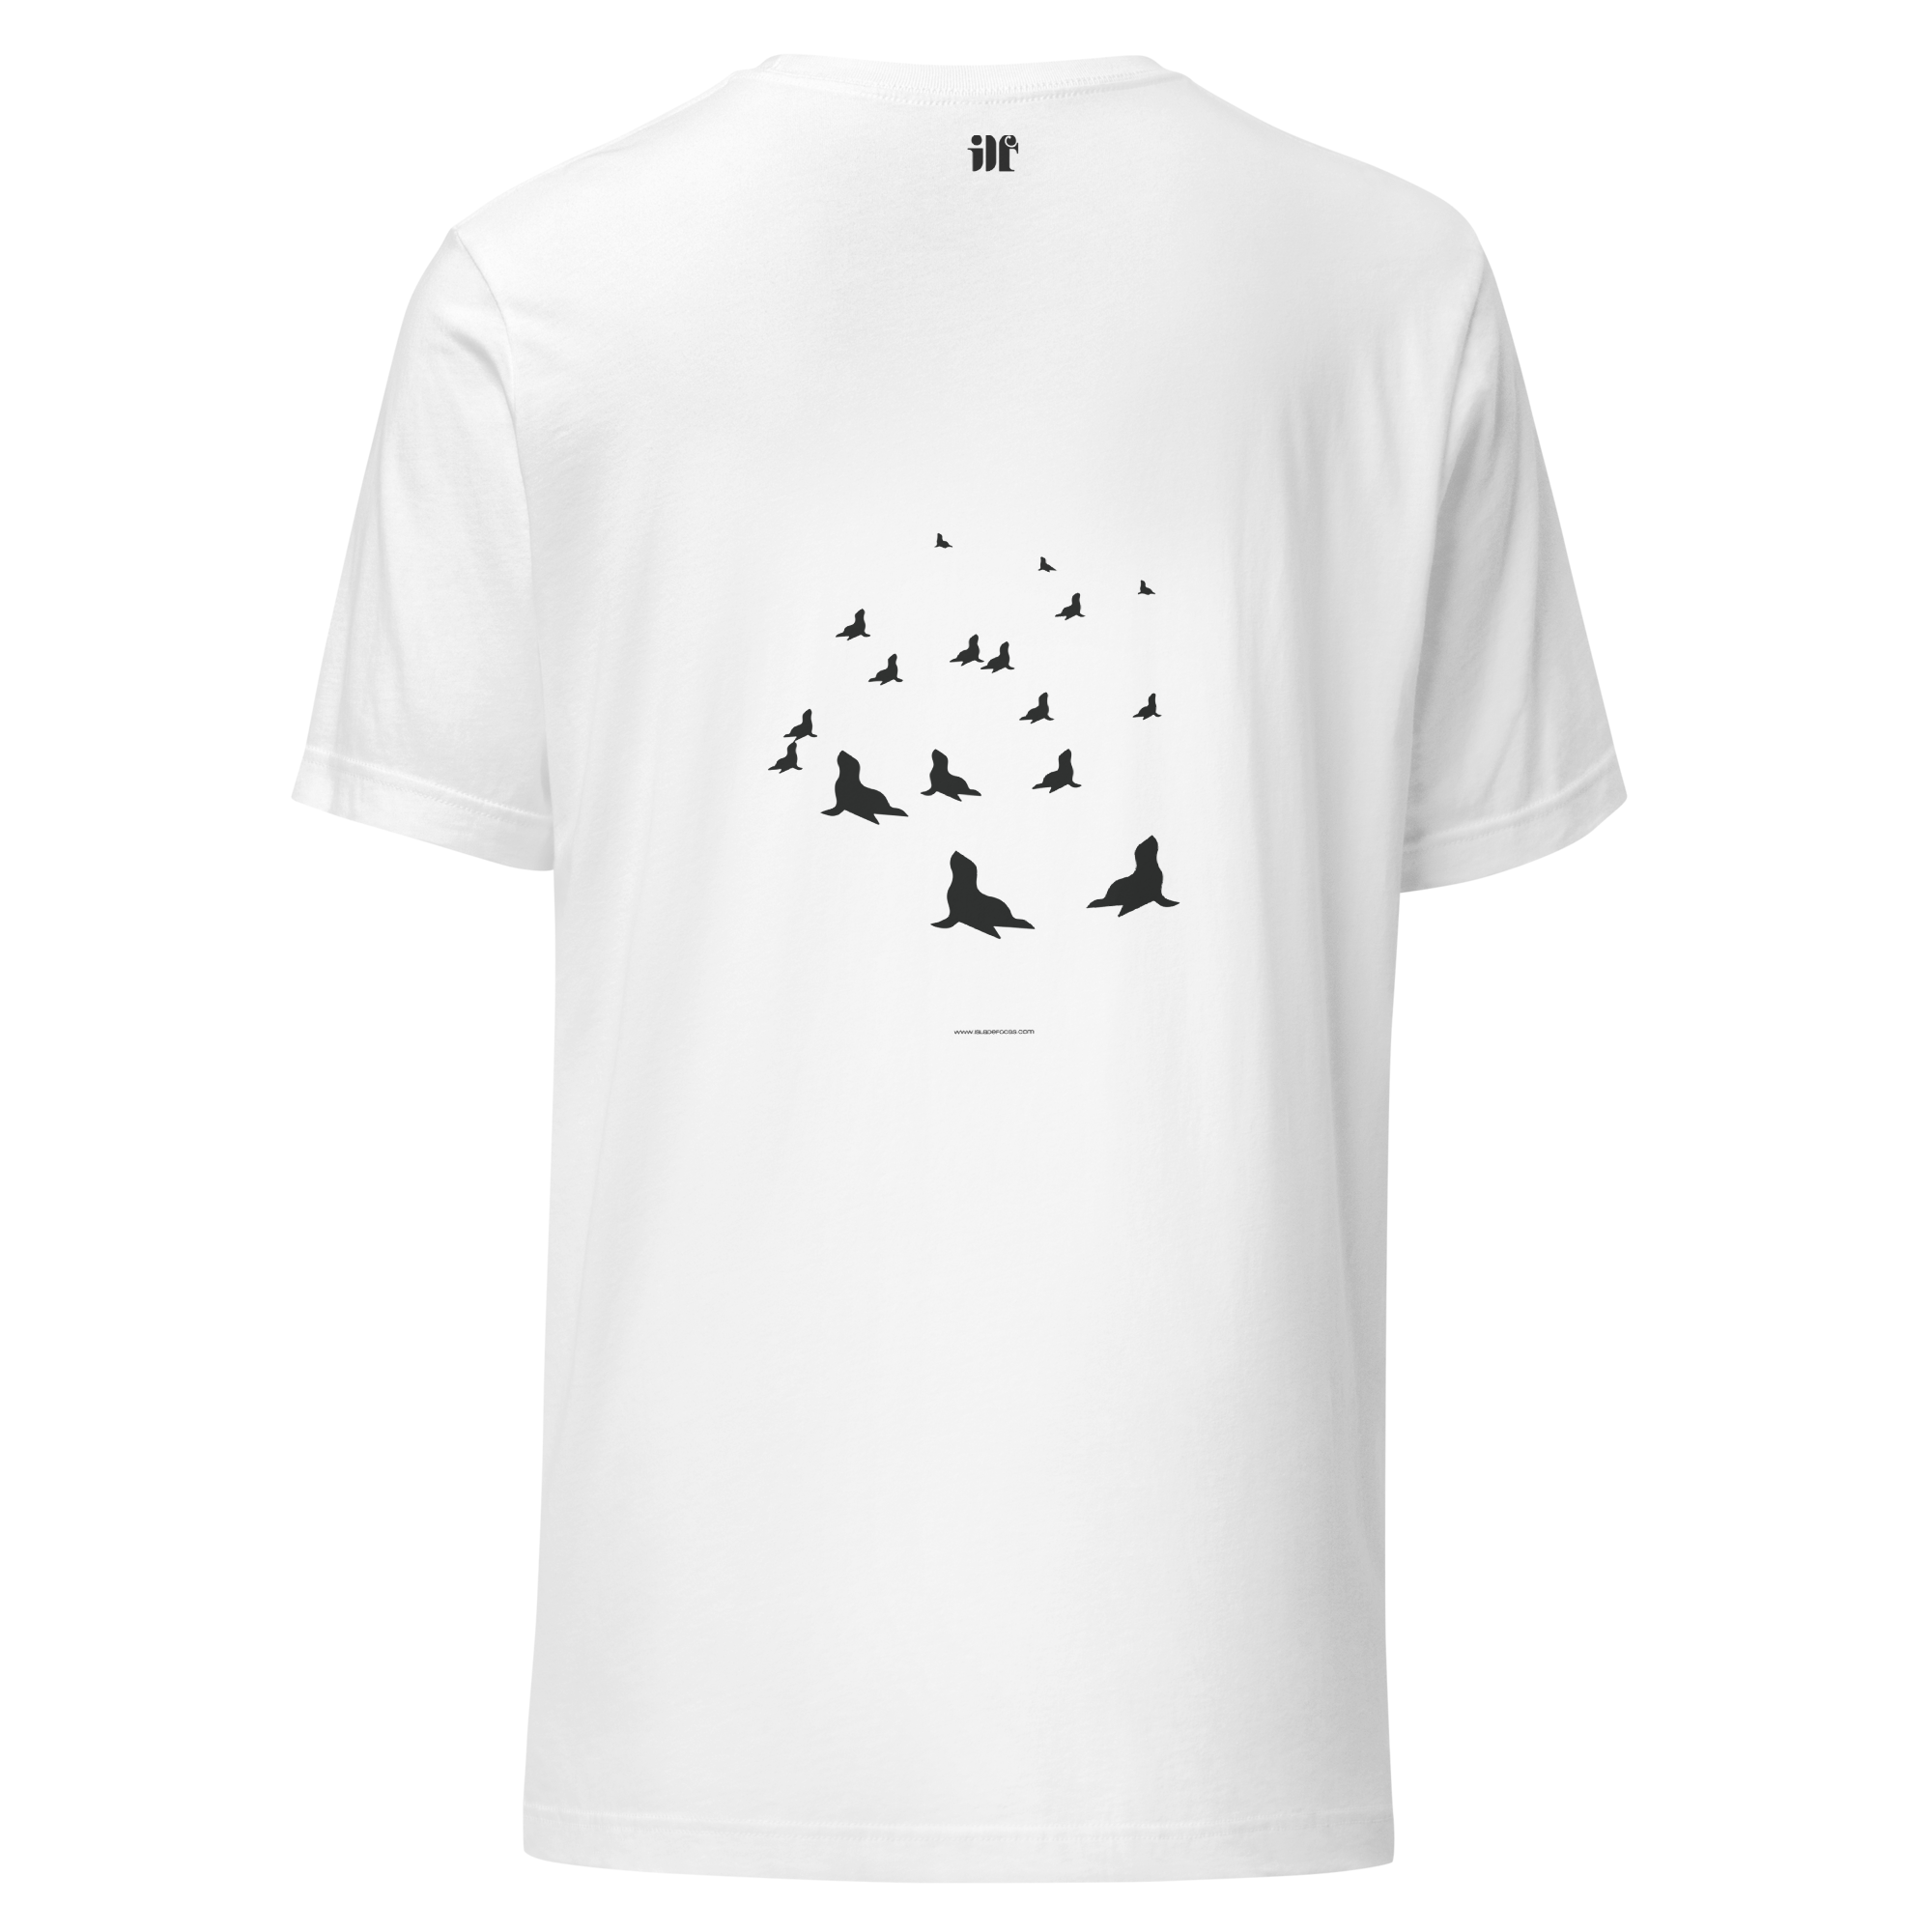 unisex-staple-t-shirt-white-back-662a450d8a7a0.png